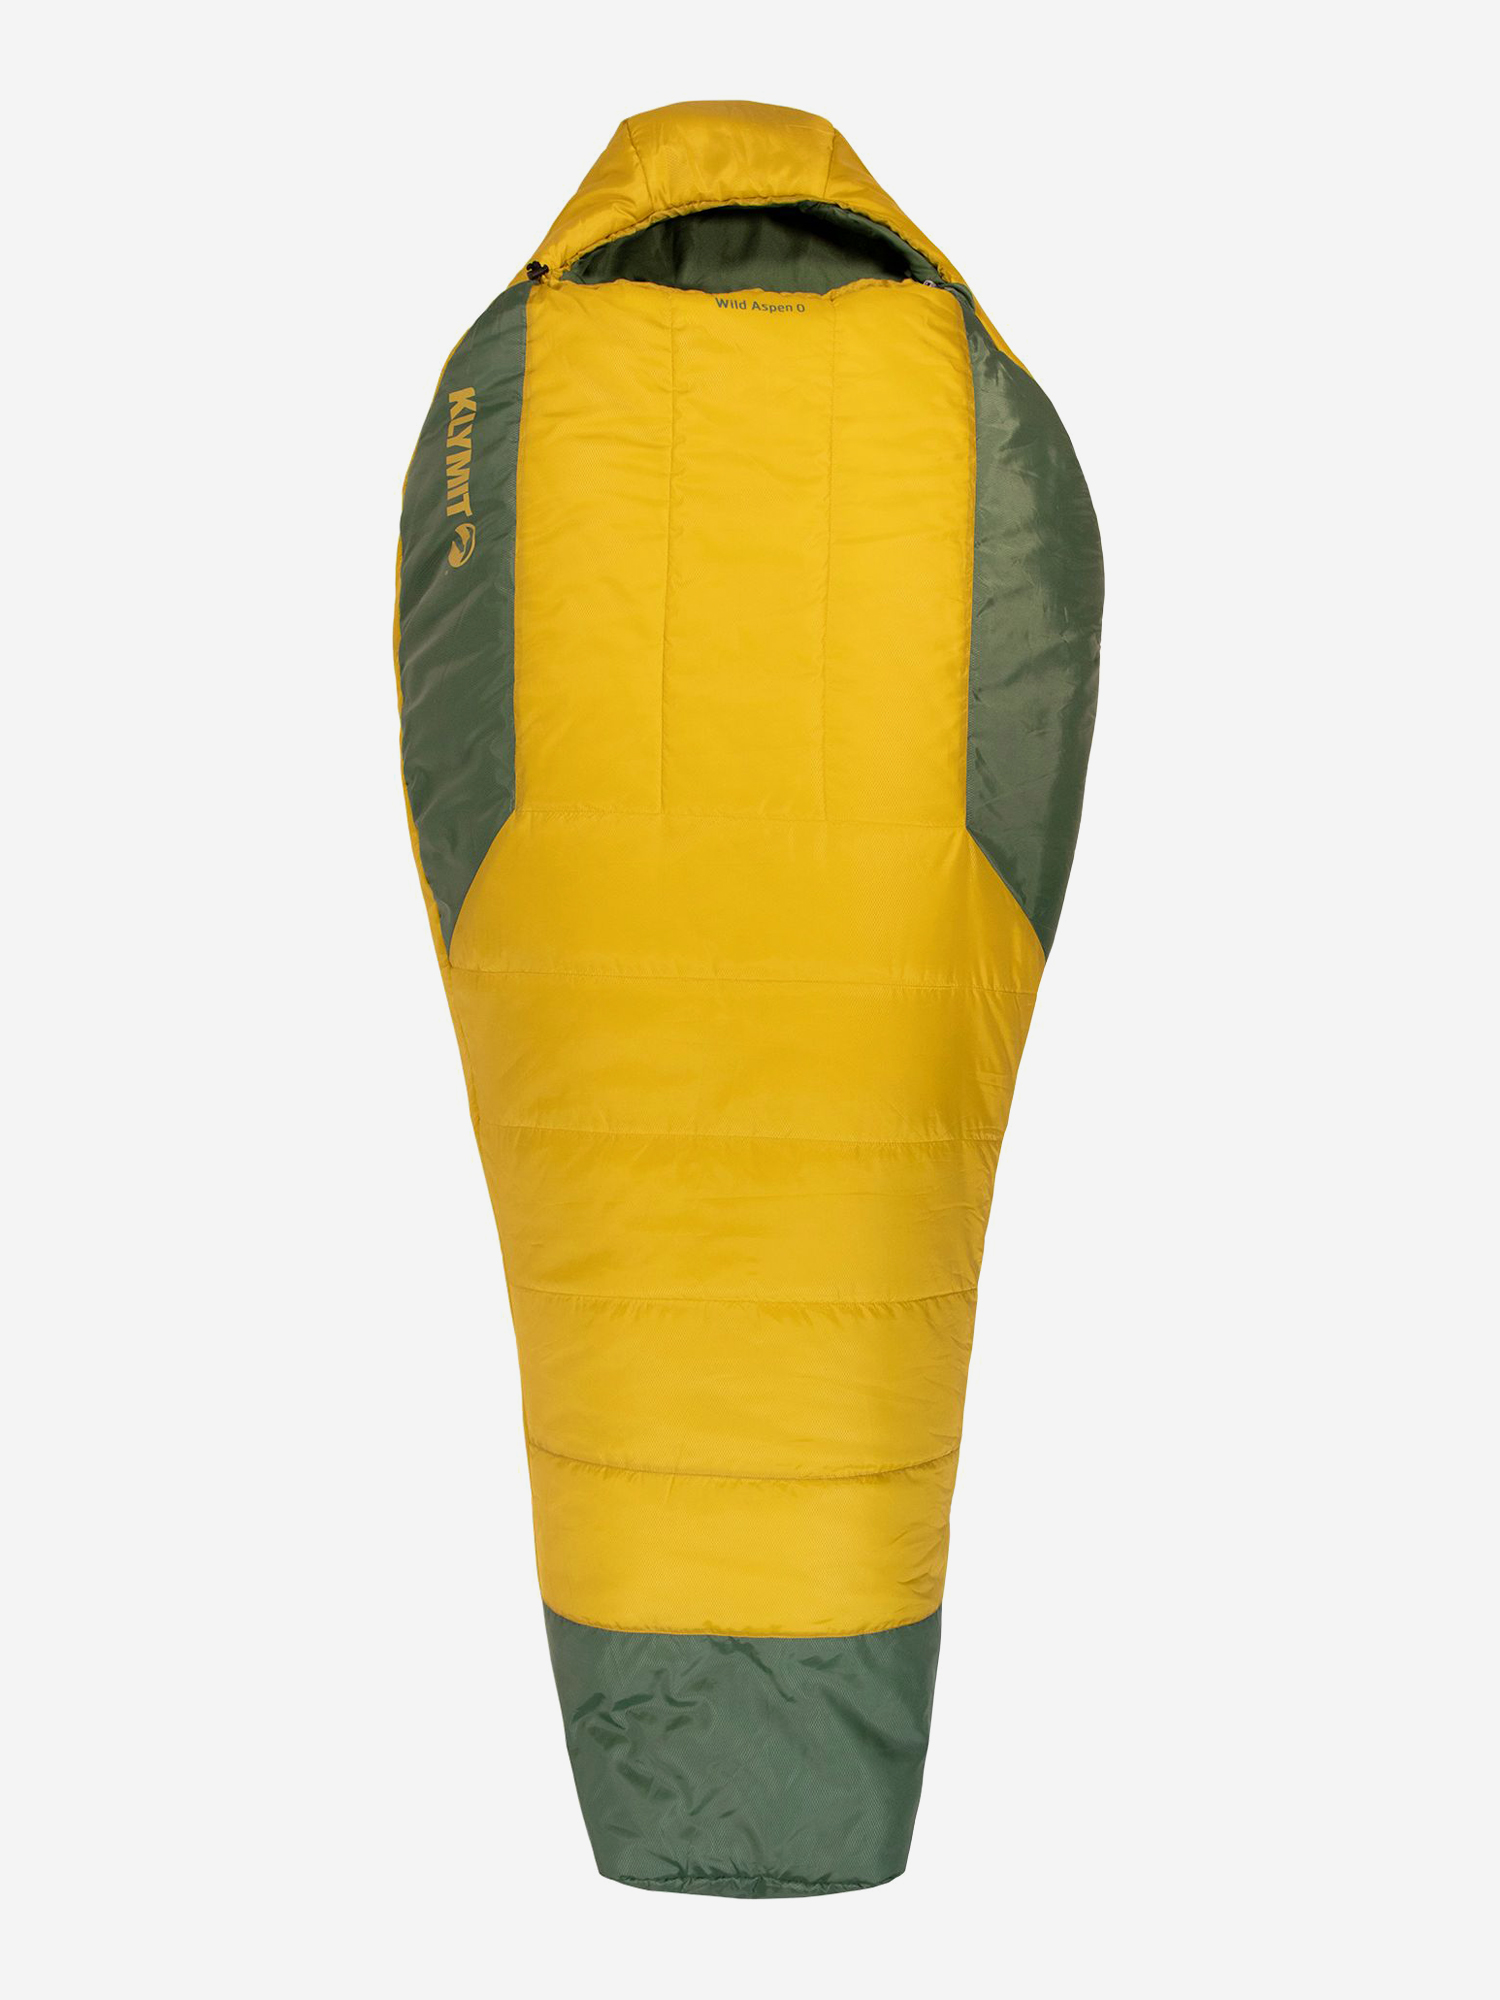 Спальный мешок KLYMIT Wild Aspen 0 Extra Large (13WAYL00E) желто-зеленый, Желтый спальный мешок klymit wild aspen 0 extra large 13wayl00e желто зеленый желтый